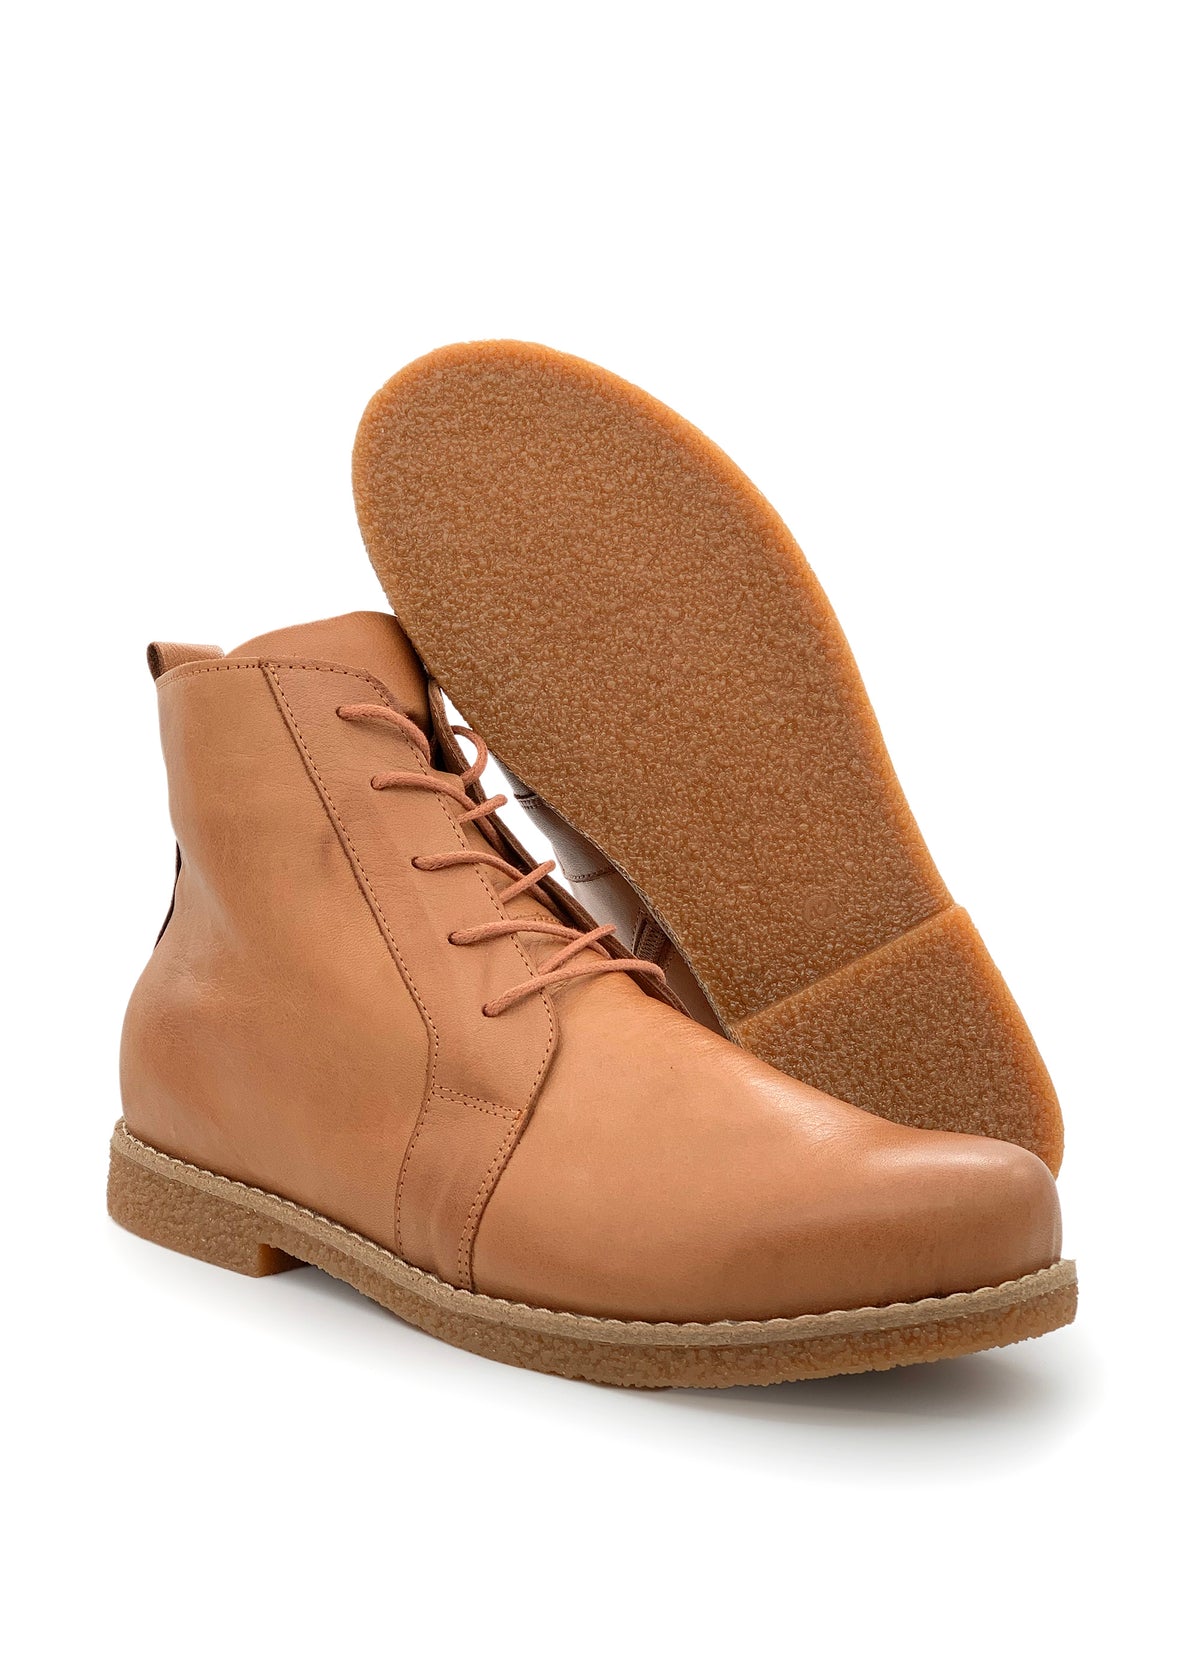 Ankle boots - cognac brown